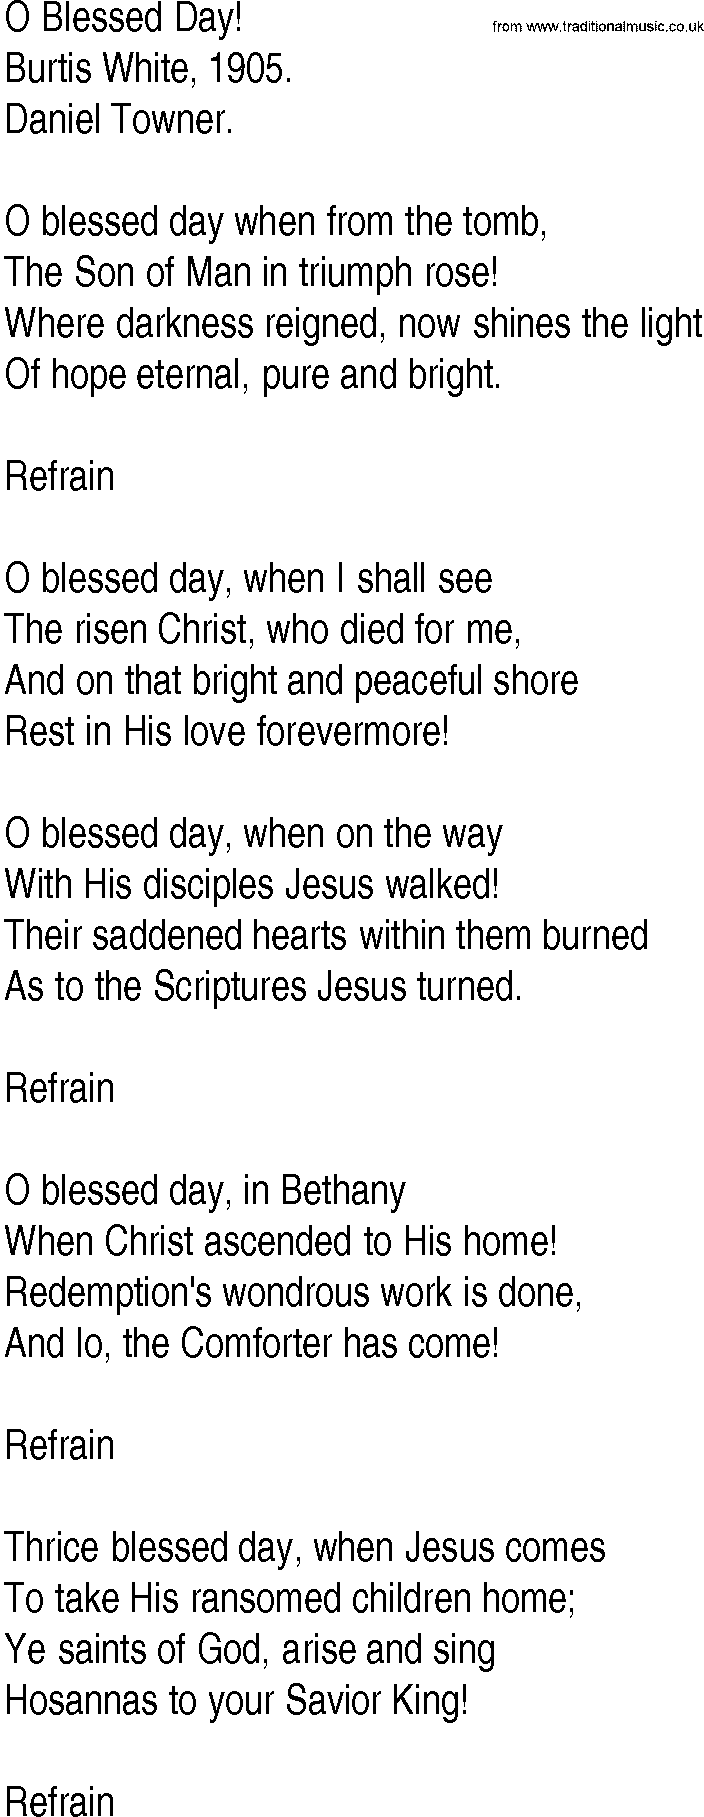 Hymn and Gospel Song: O Blessed Day! by Burtis White lyrics